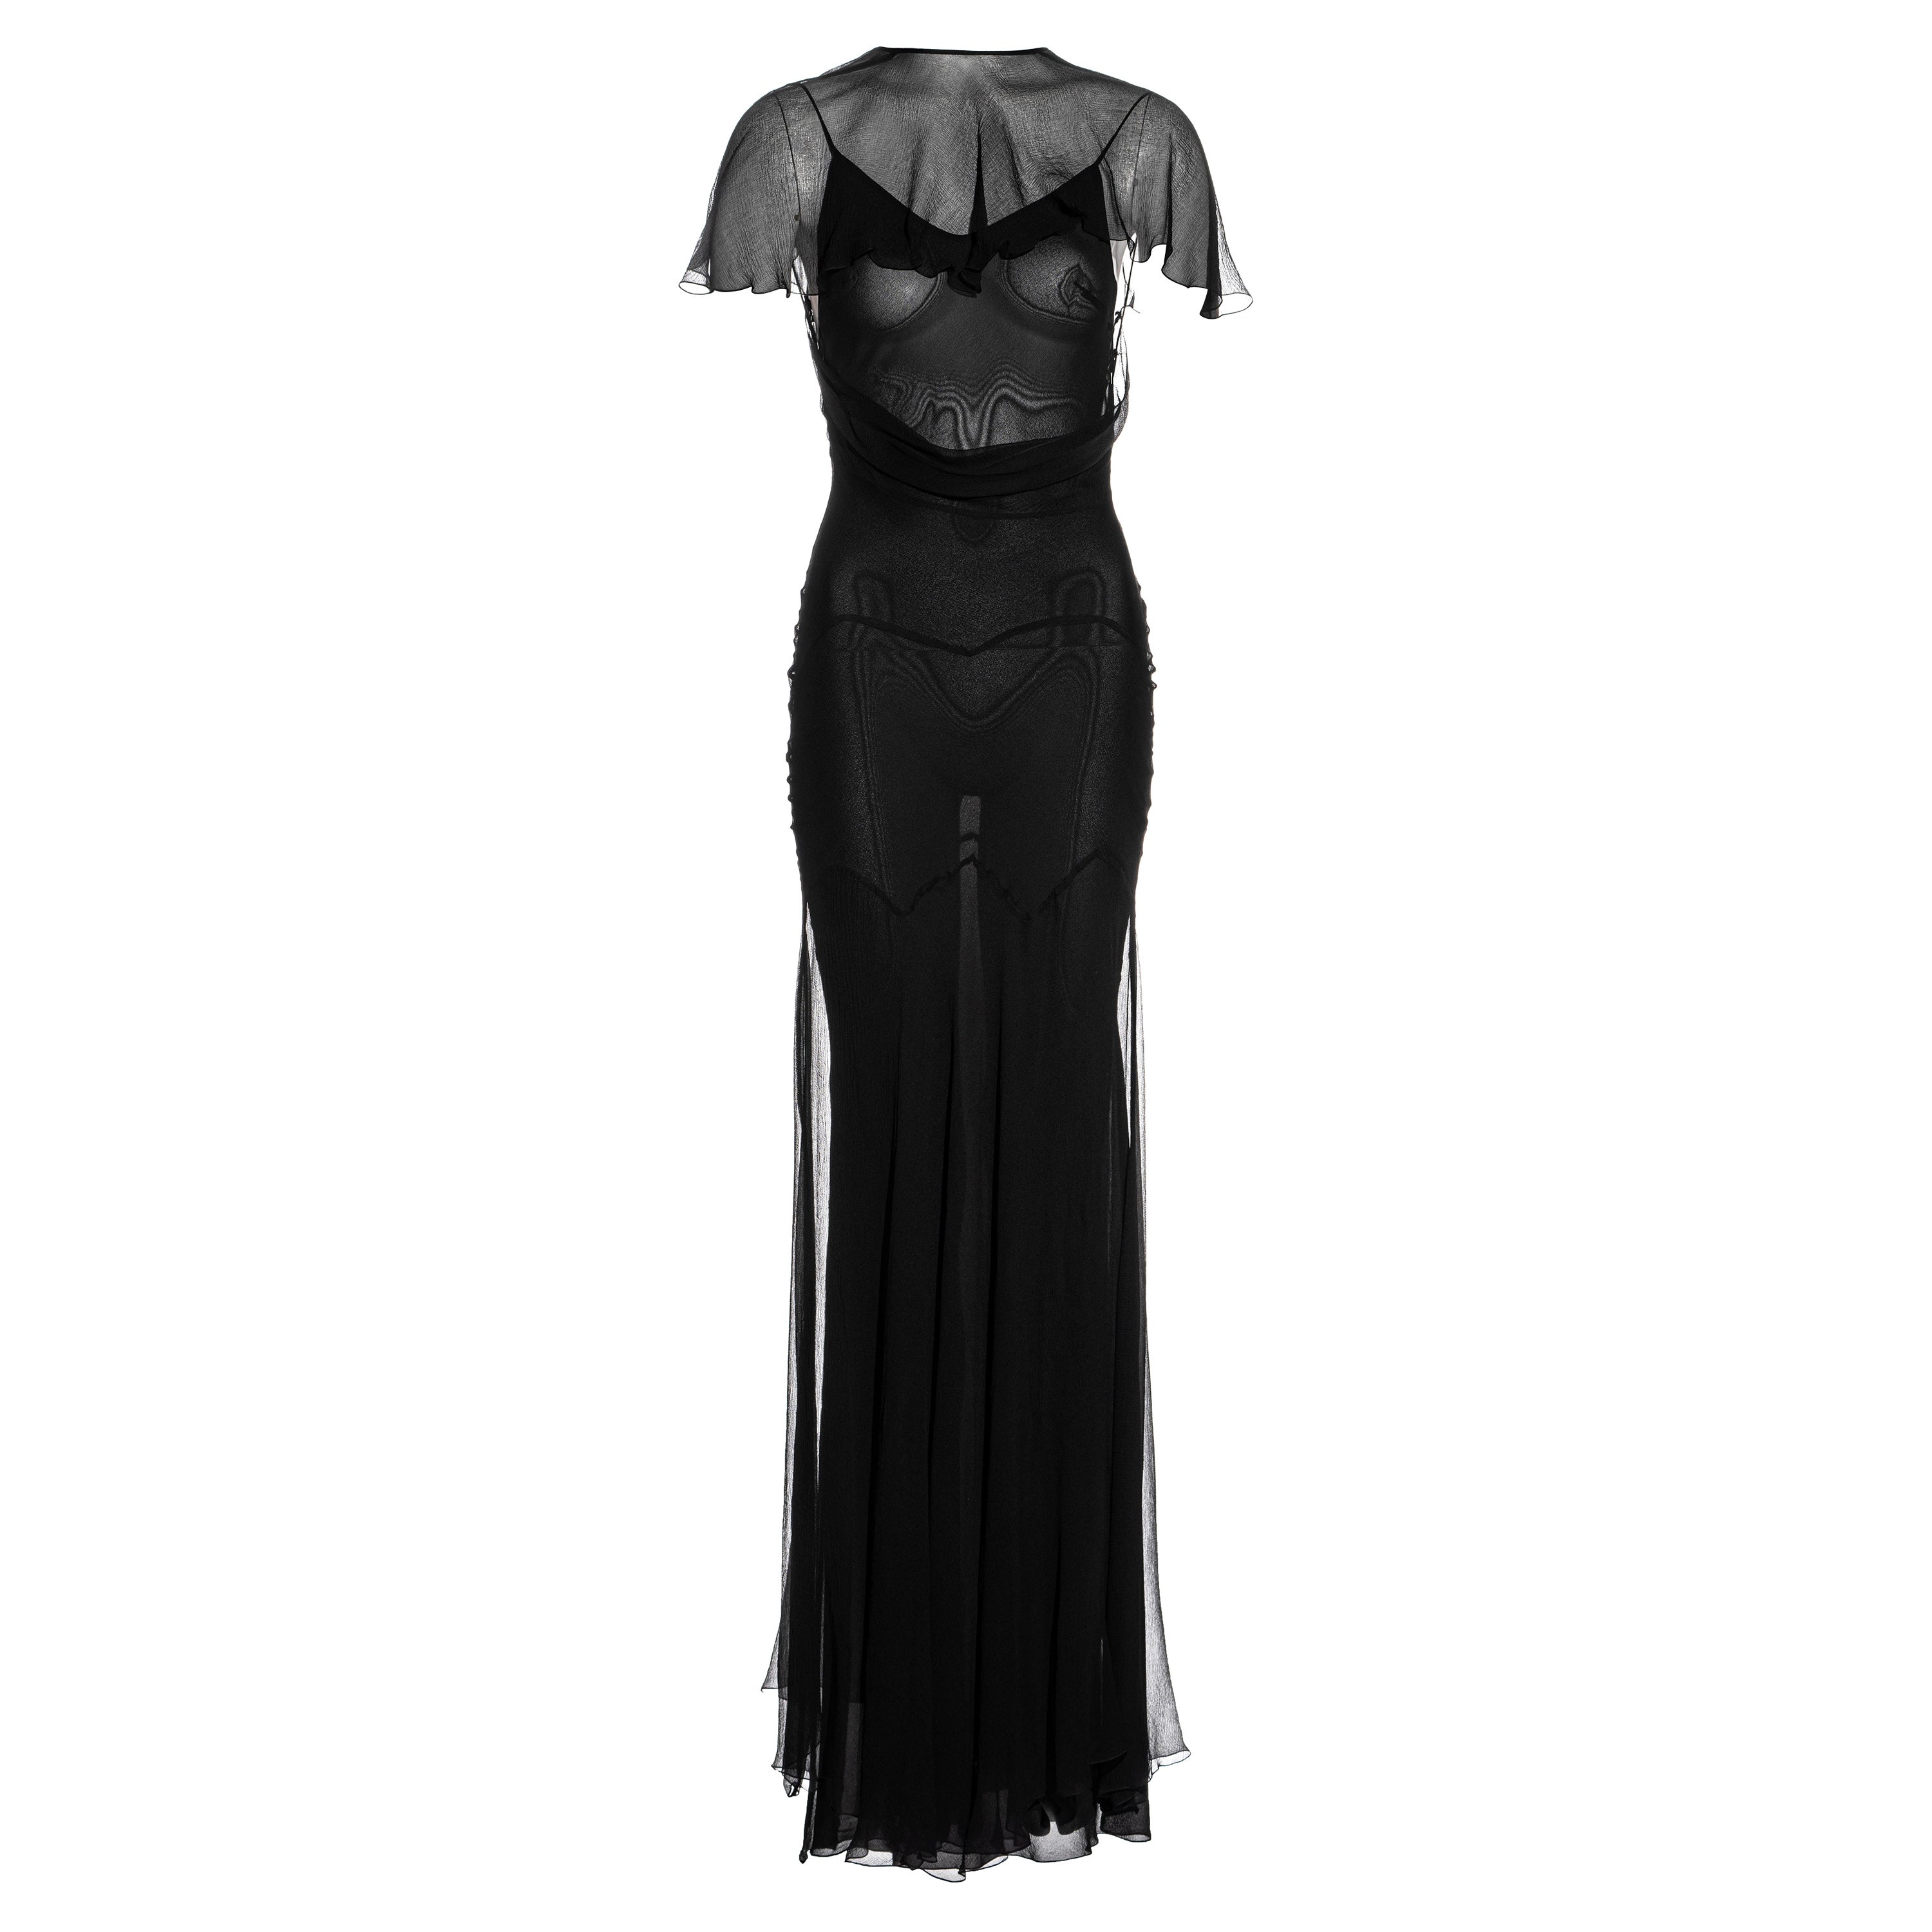 John Galliano black silk chiffon double layered bias cut dress, c. 1995 - 1999